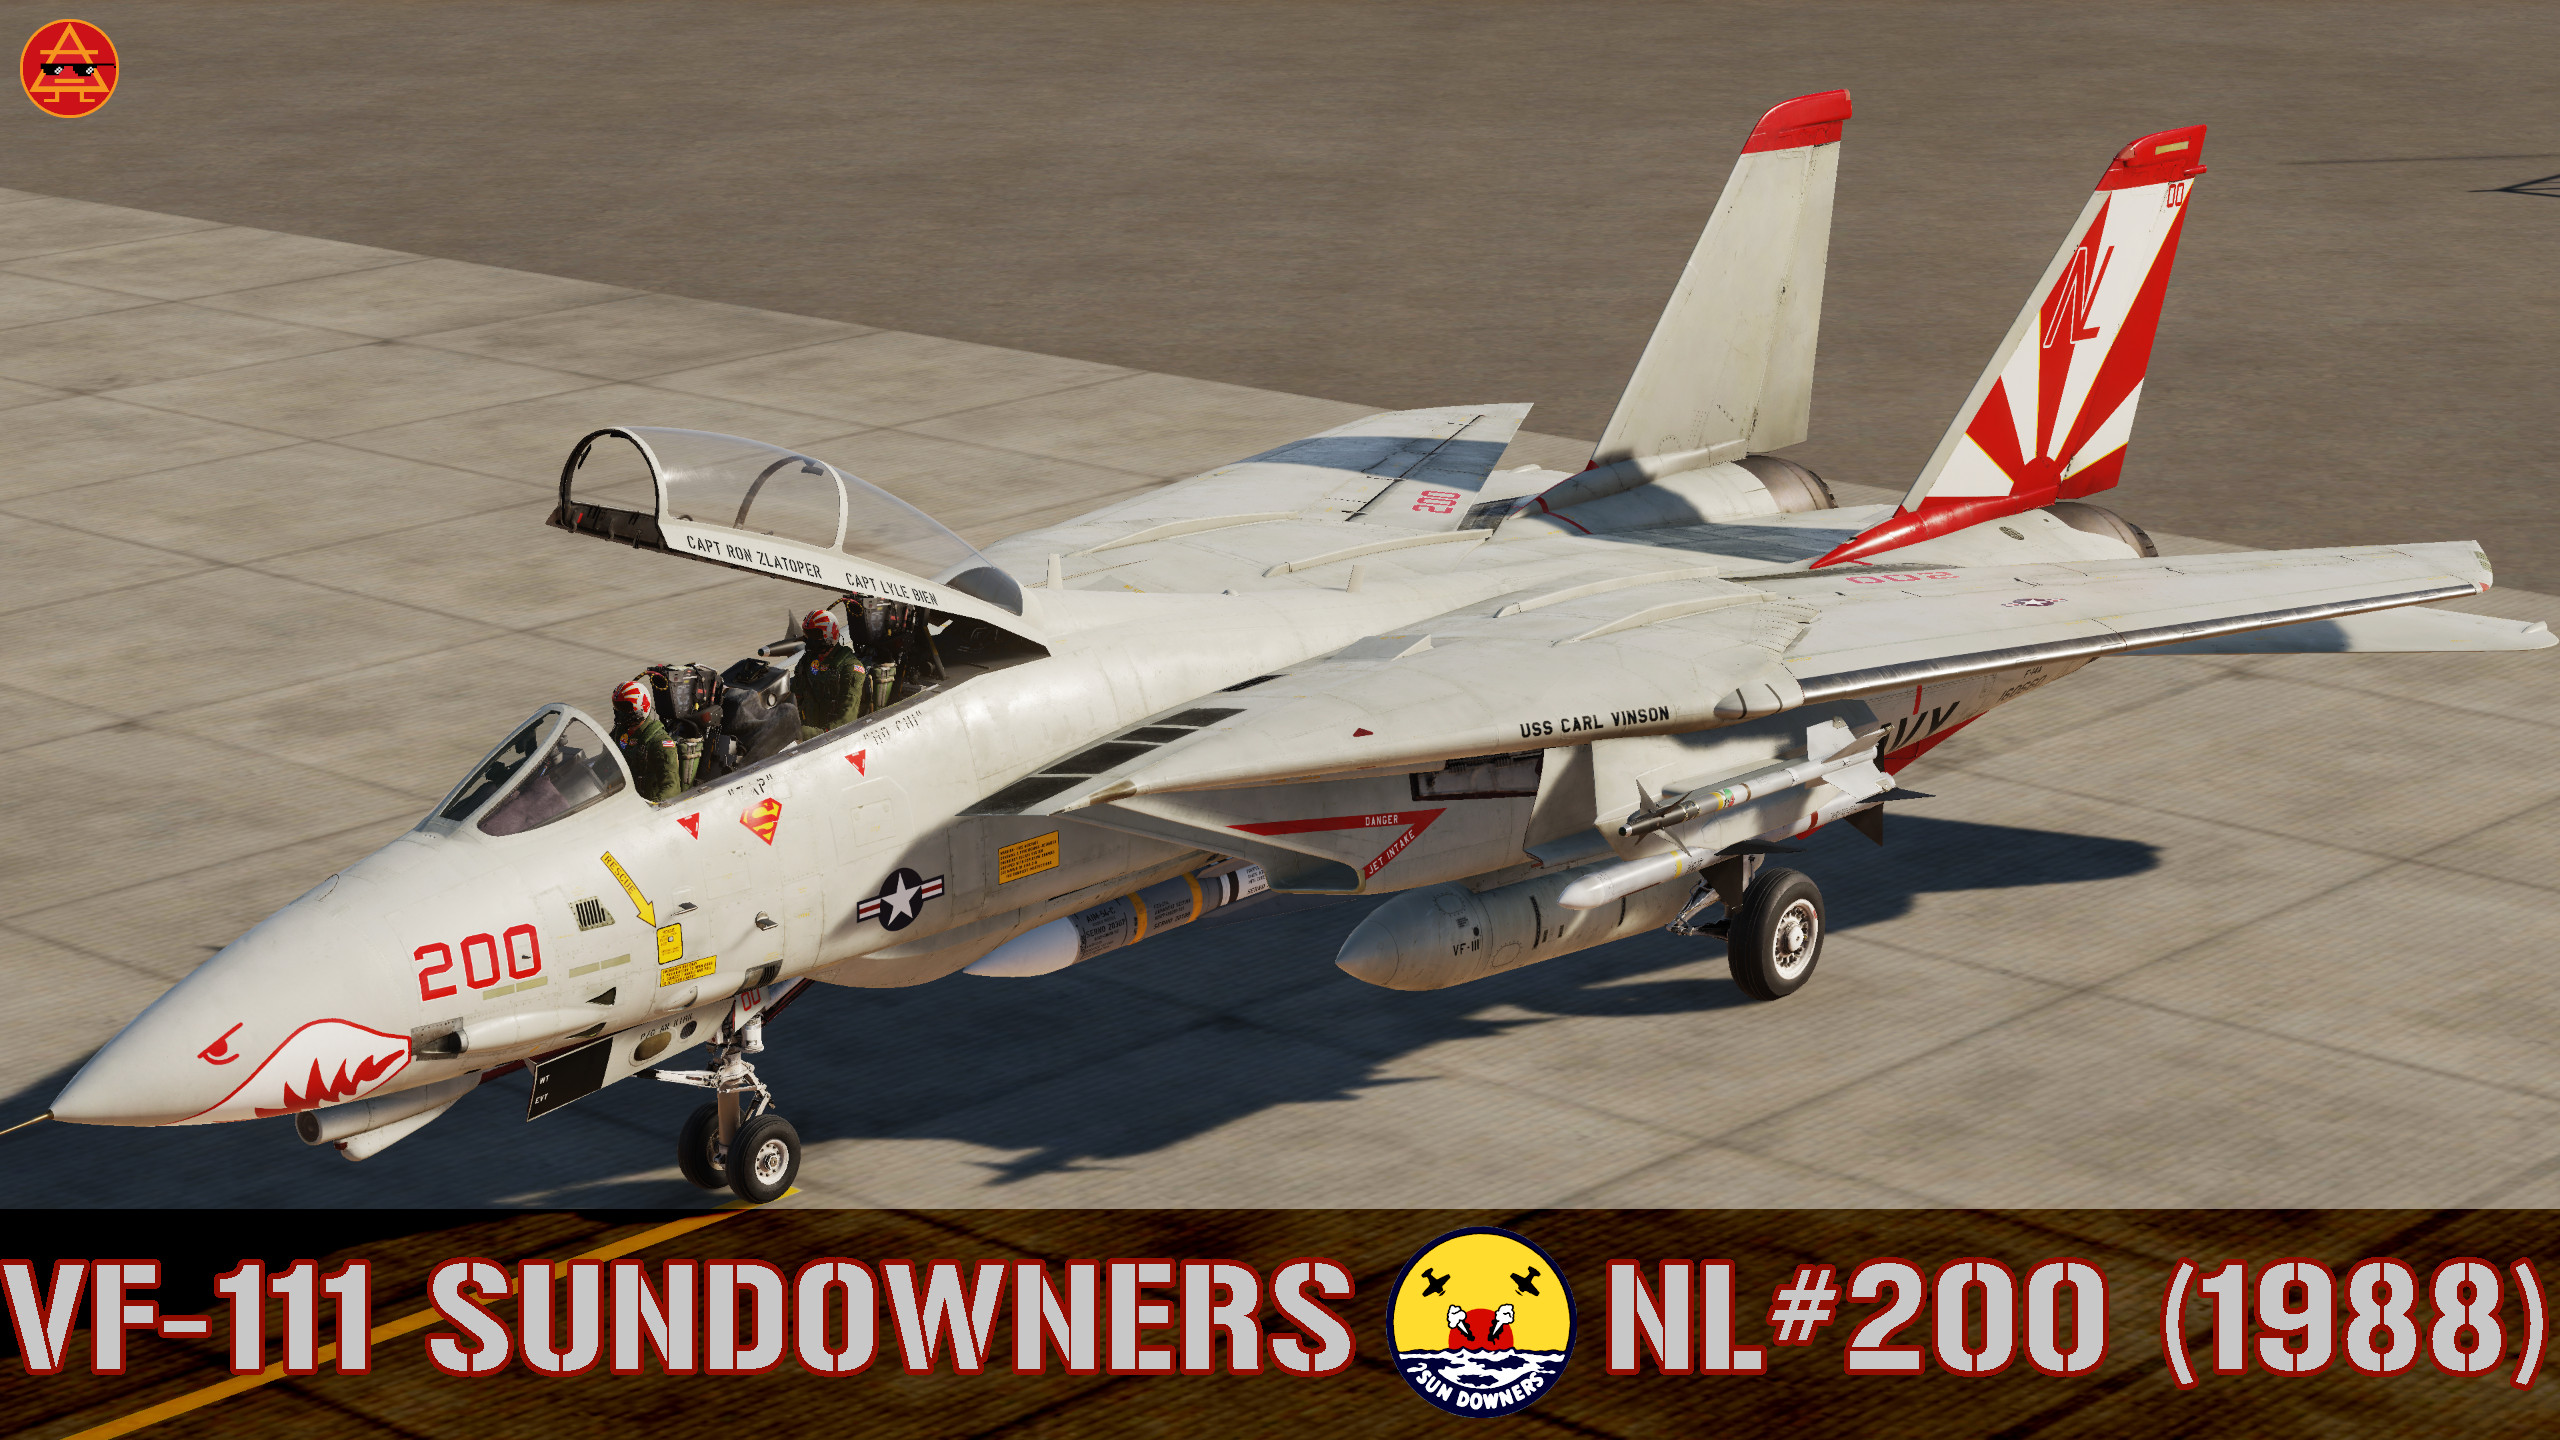 VF-111 "SUNDOWNERS" NL#200 "Super CAG" - 1988 (F-14A)